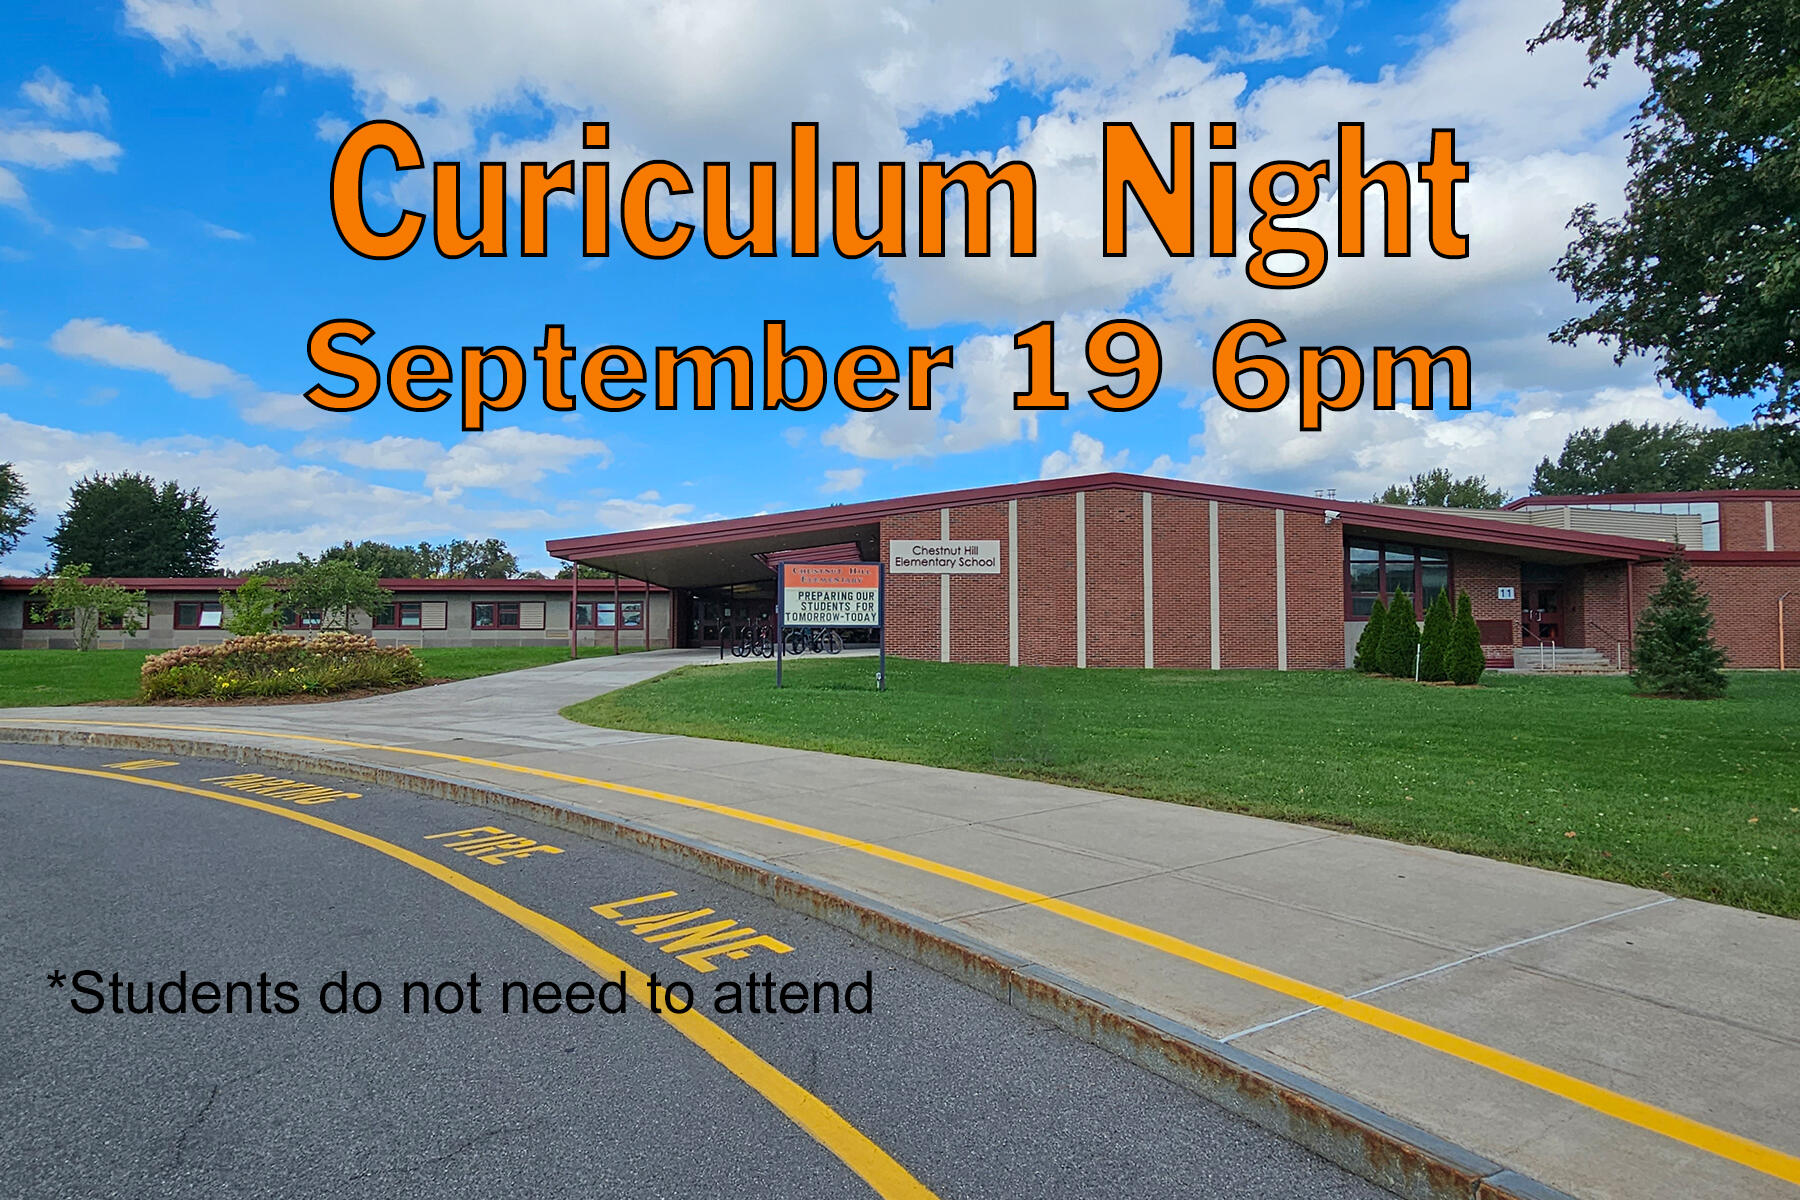 Curriculum Night - September 19 6pm